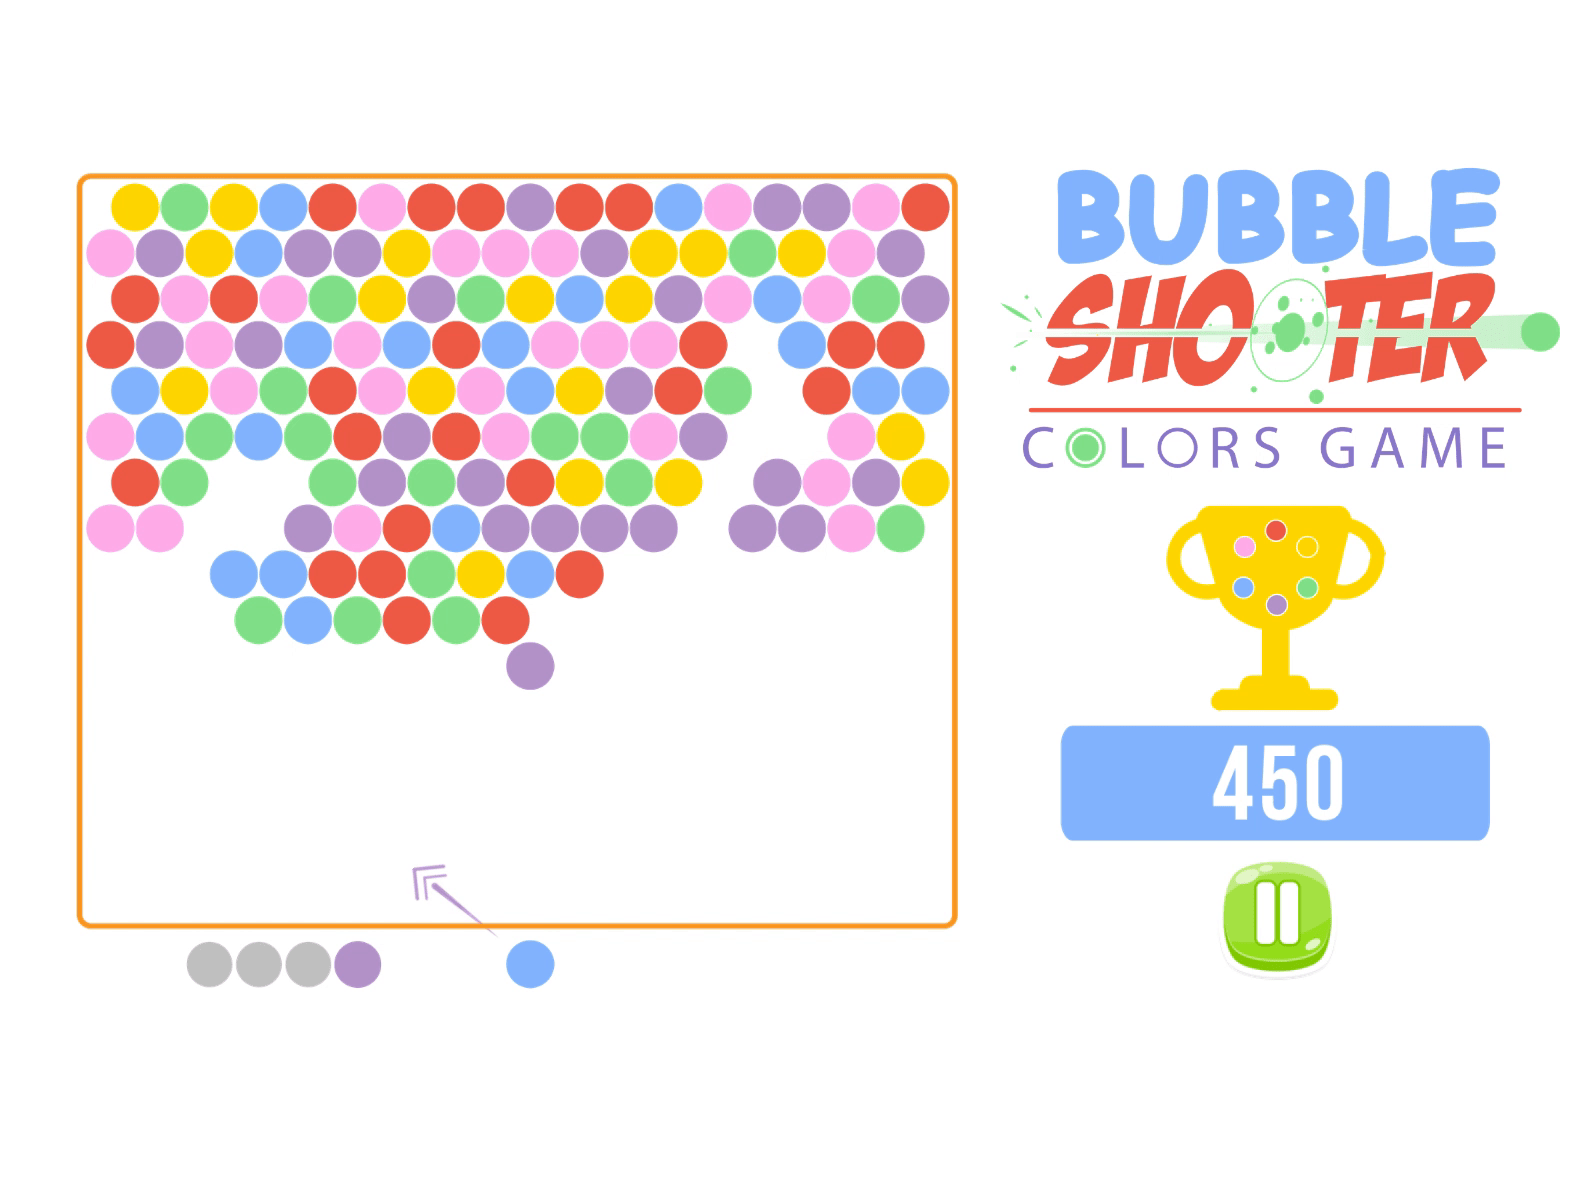 Bubble Shooter Colors Game Screenshot 7